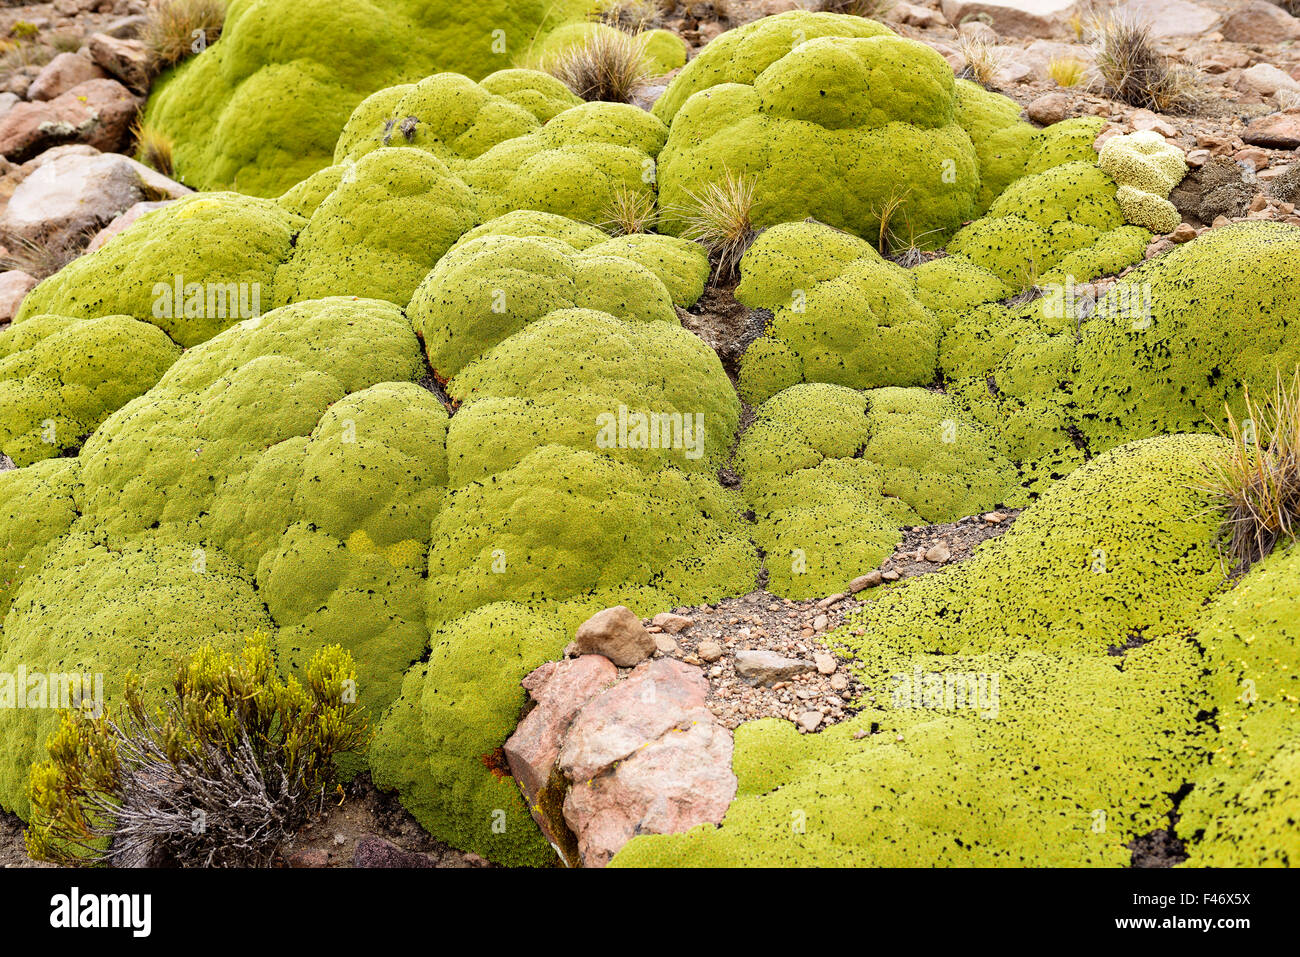 Yareta or llaretta (Azorella compacta), resinous cushion plant on rocky slopes, Altiplano, Bolivia Stock Photo